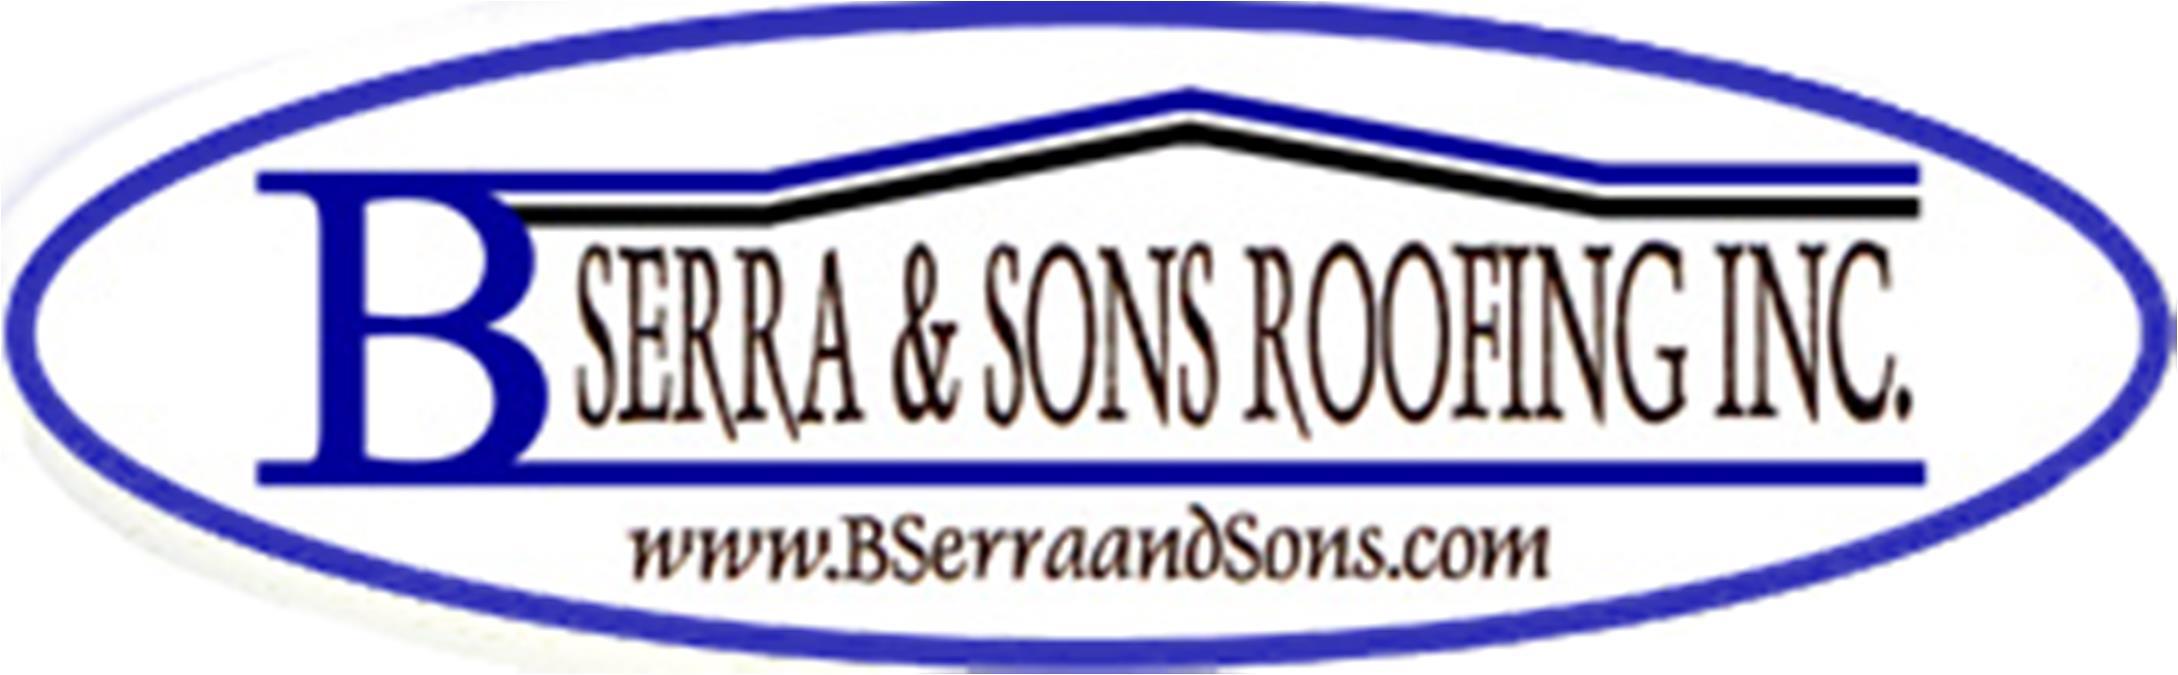 B Serra & Sons Roofing Inc.